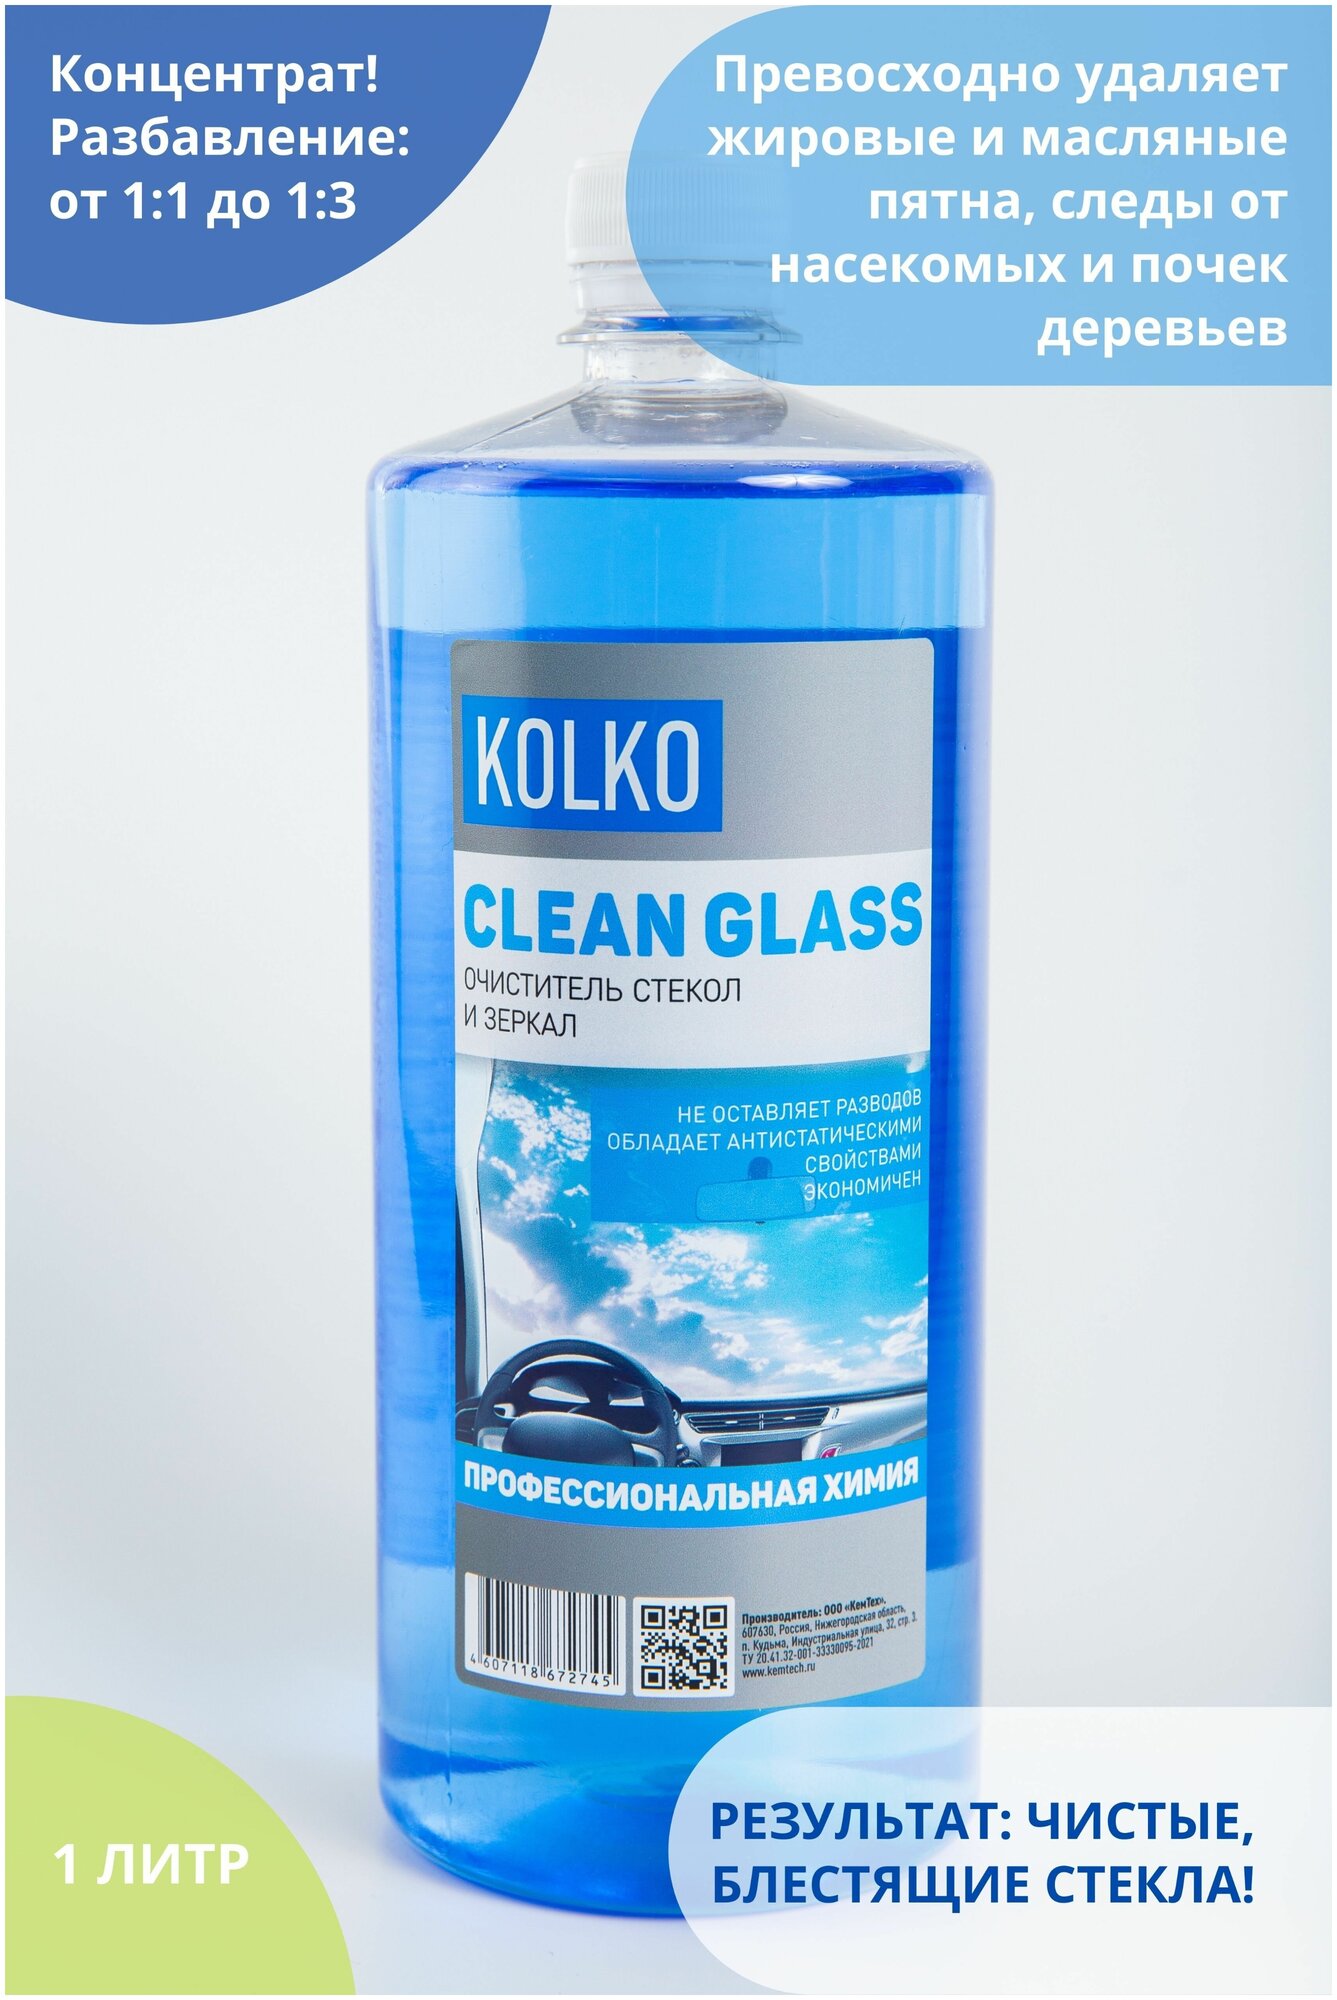 Очиститель стекол и зеркал автомобиля Kolko Clean Glass средство для чистки стекол хрома кафеля концентрат 1 литр